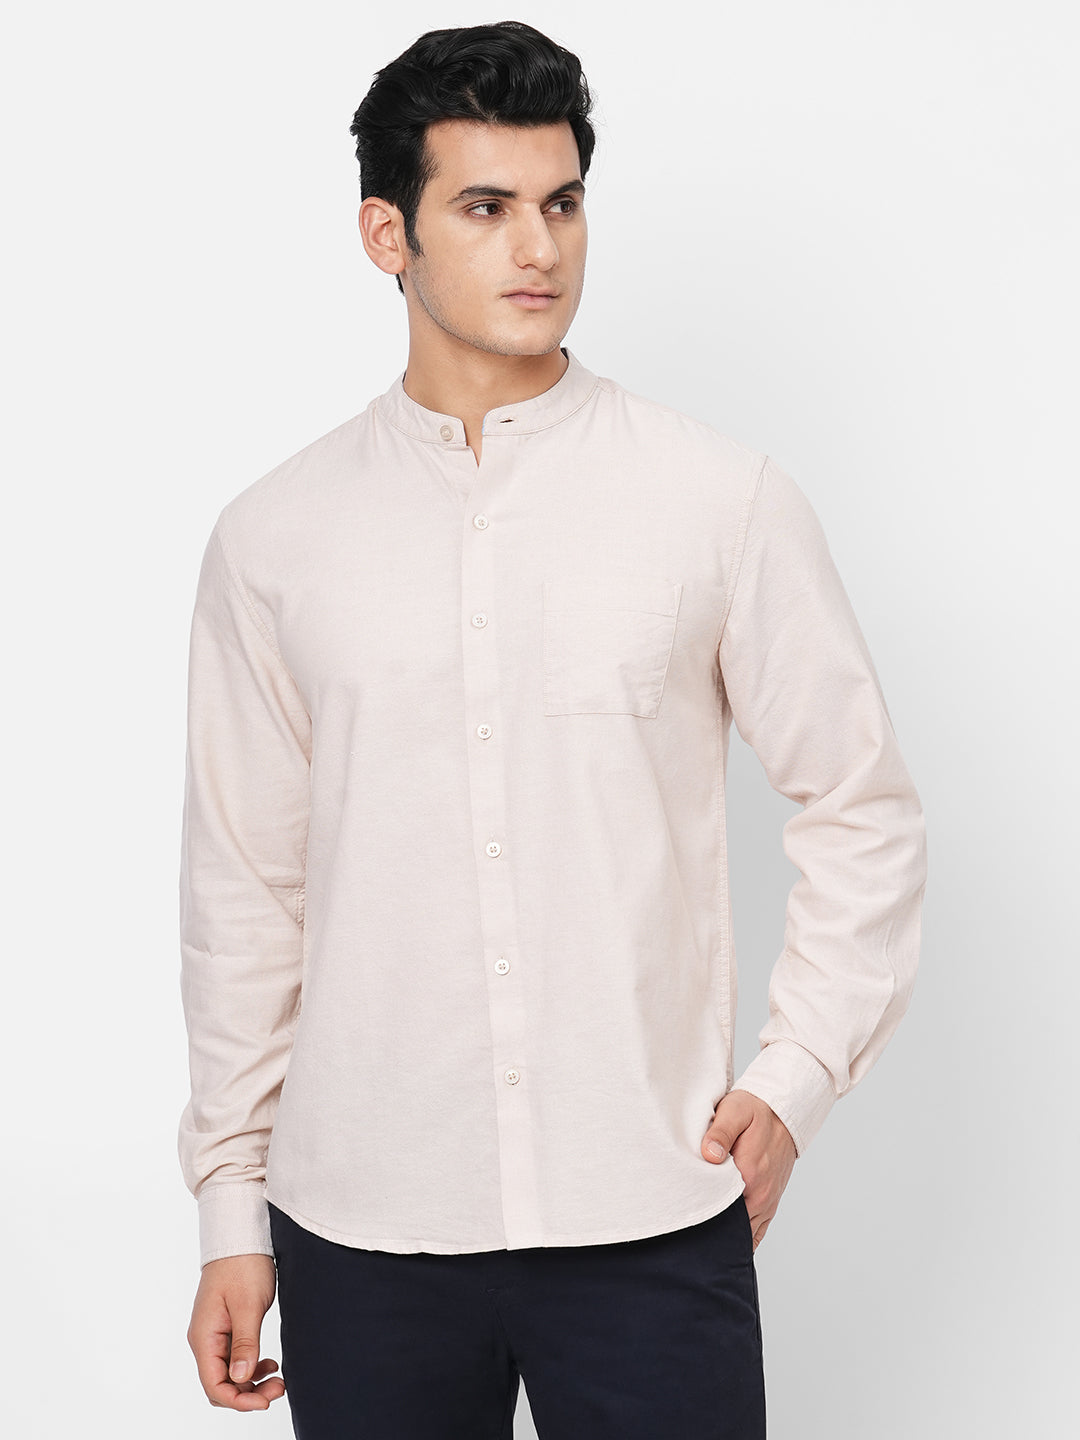 Men's Khaki Oxford Cotton Band Collar Long Sleeved Shirt